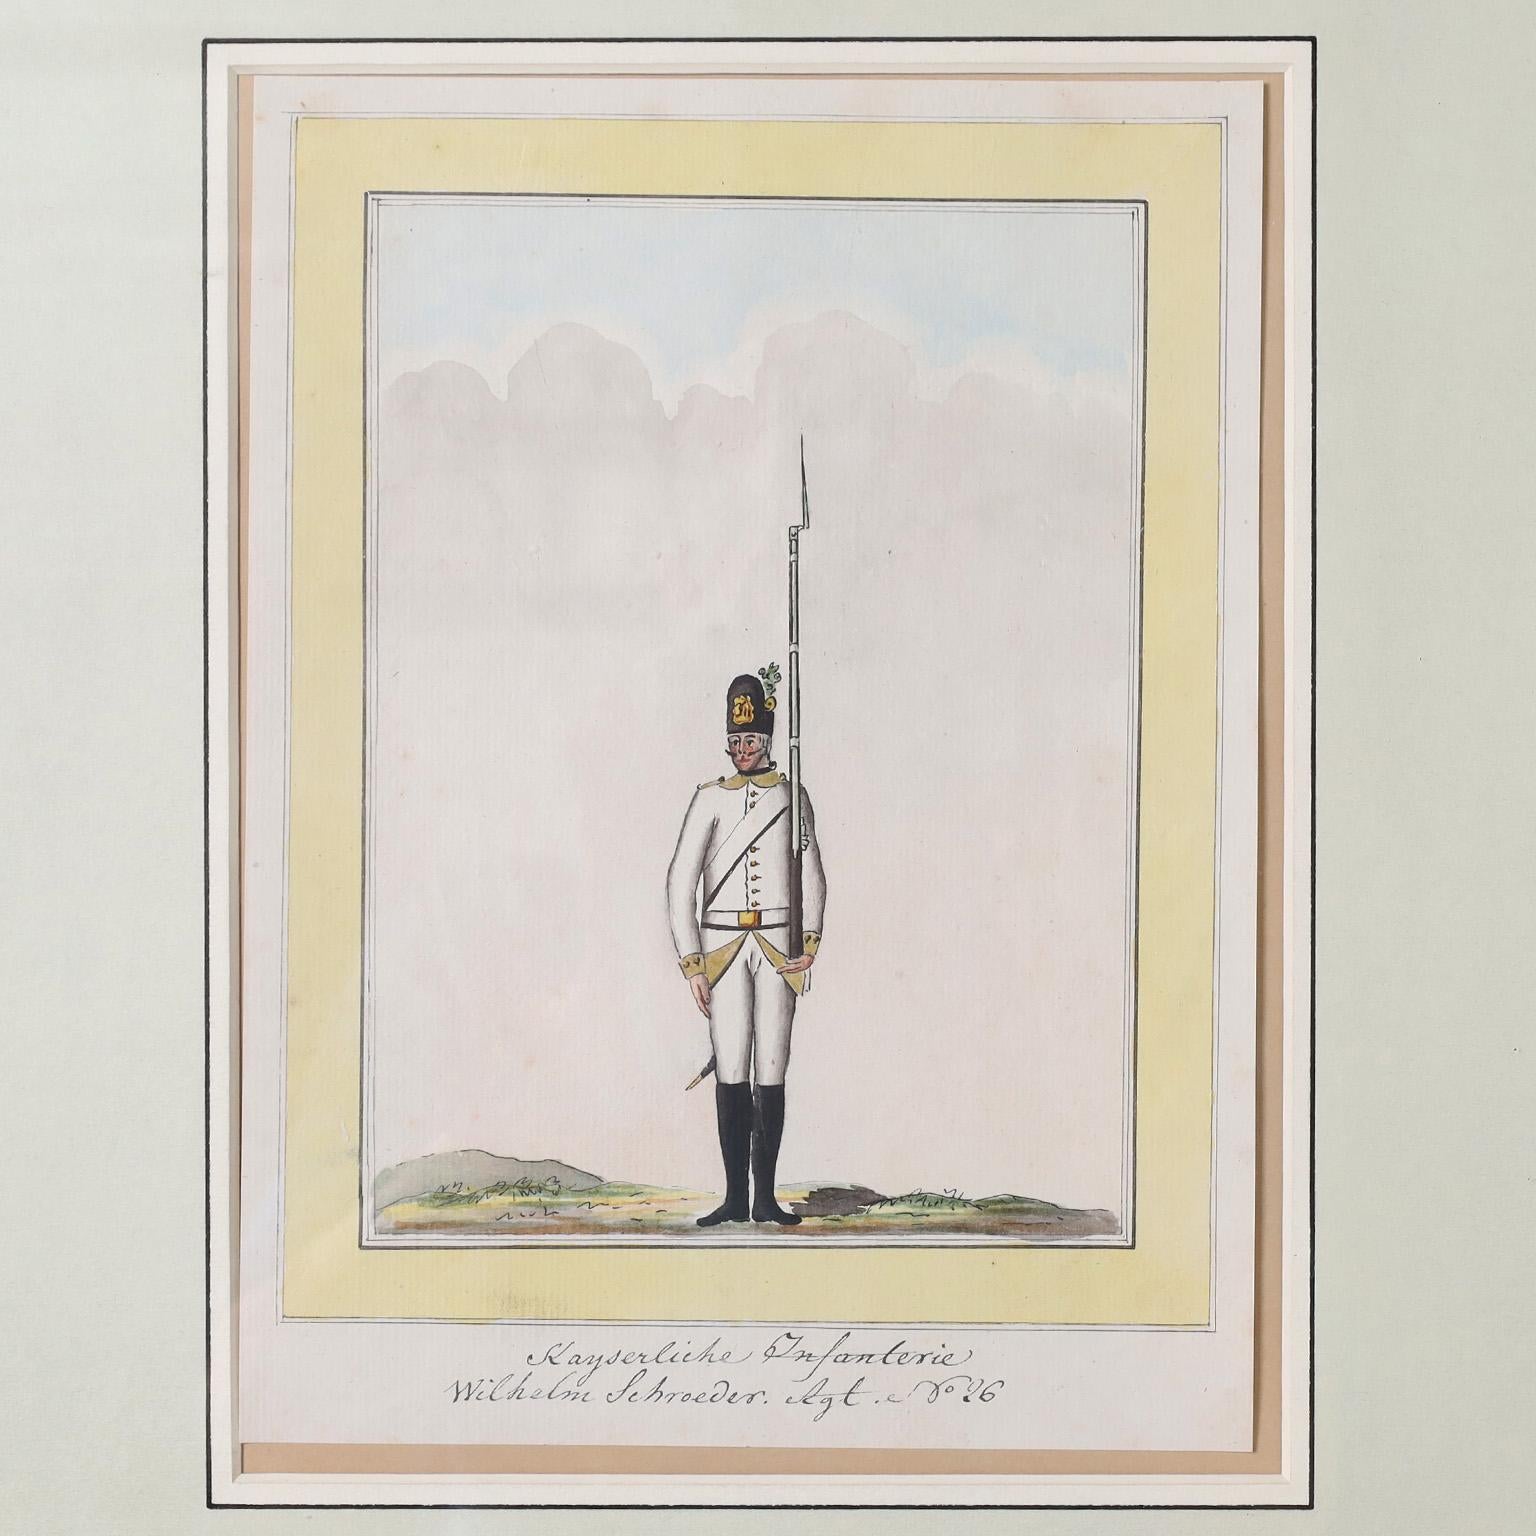 18th century military uniforms